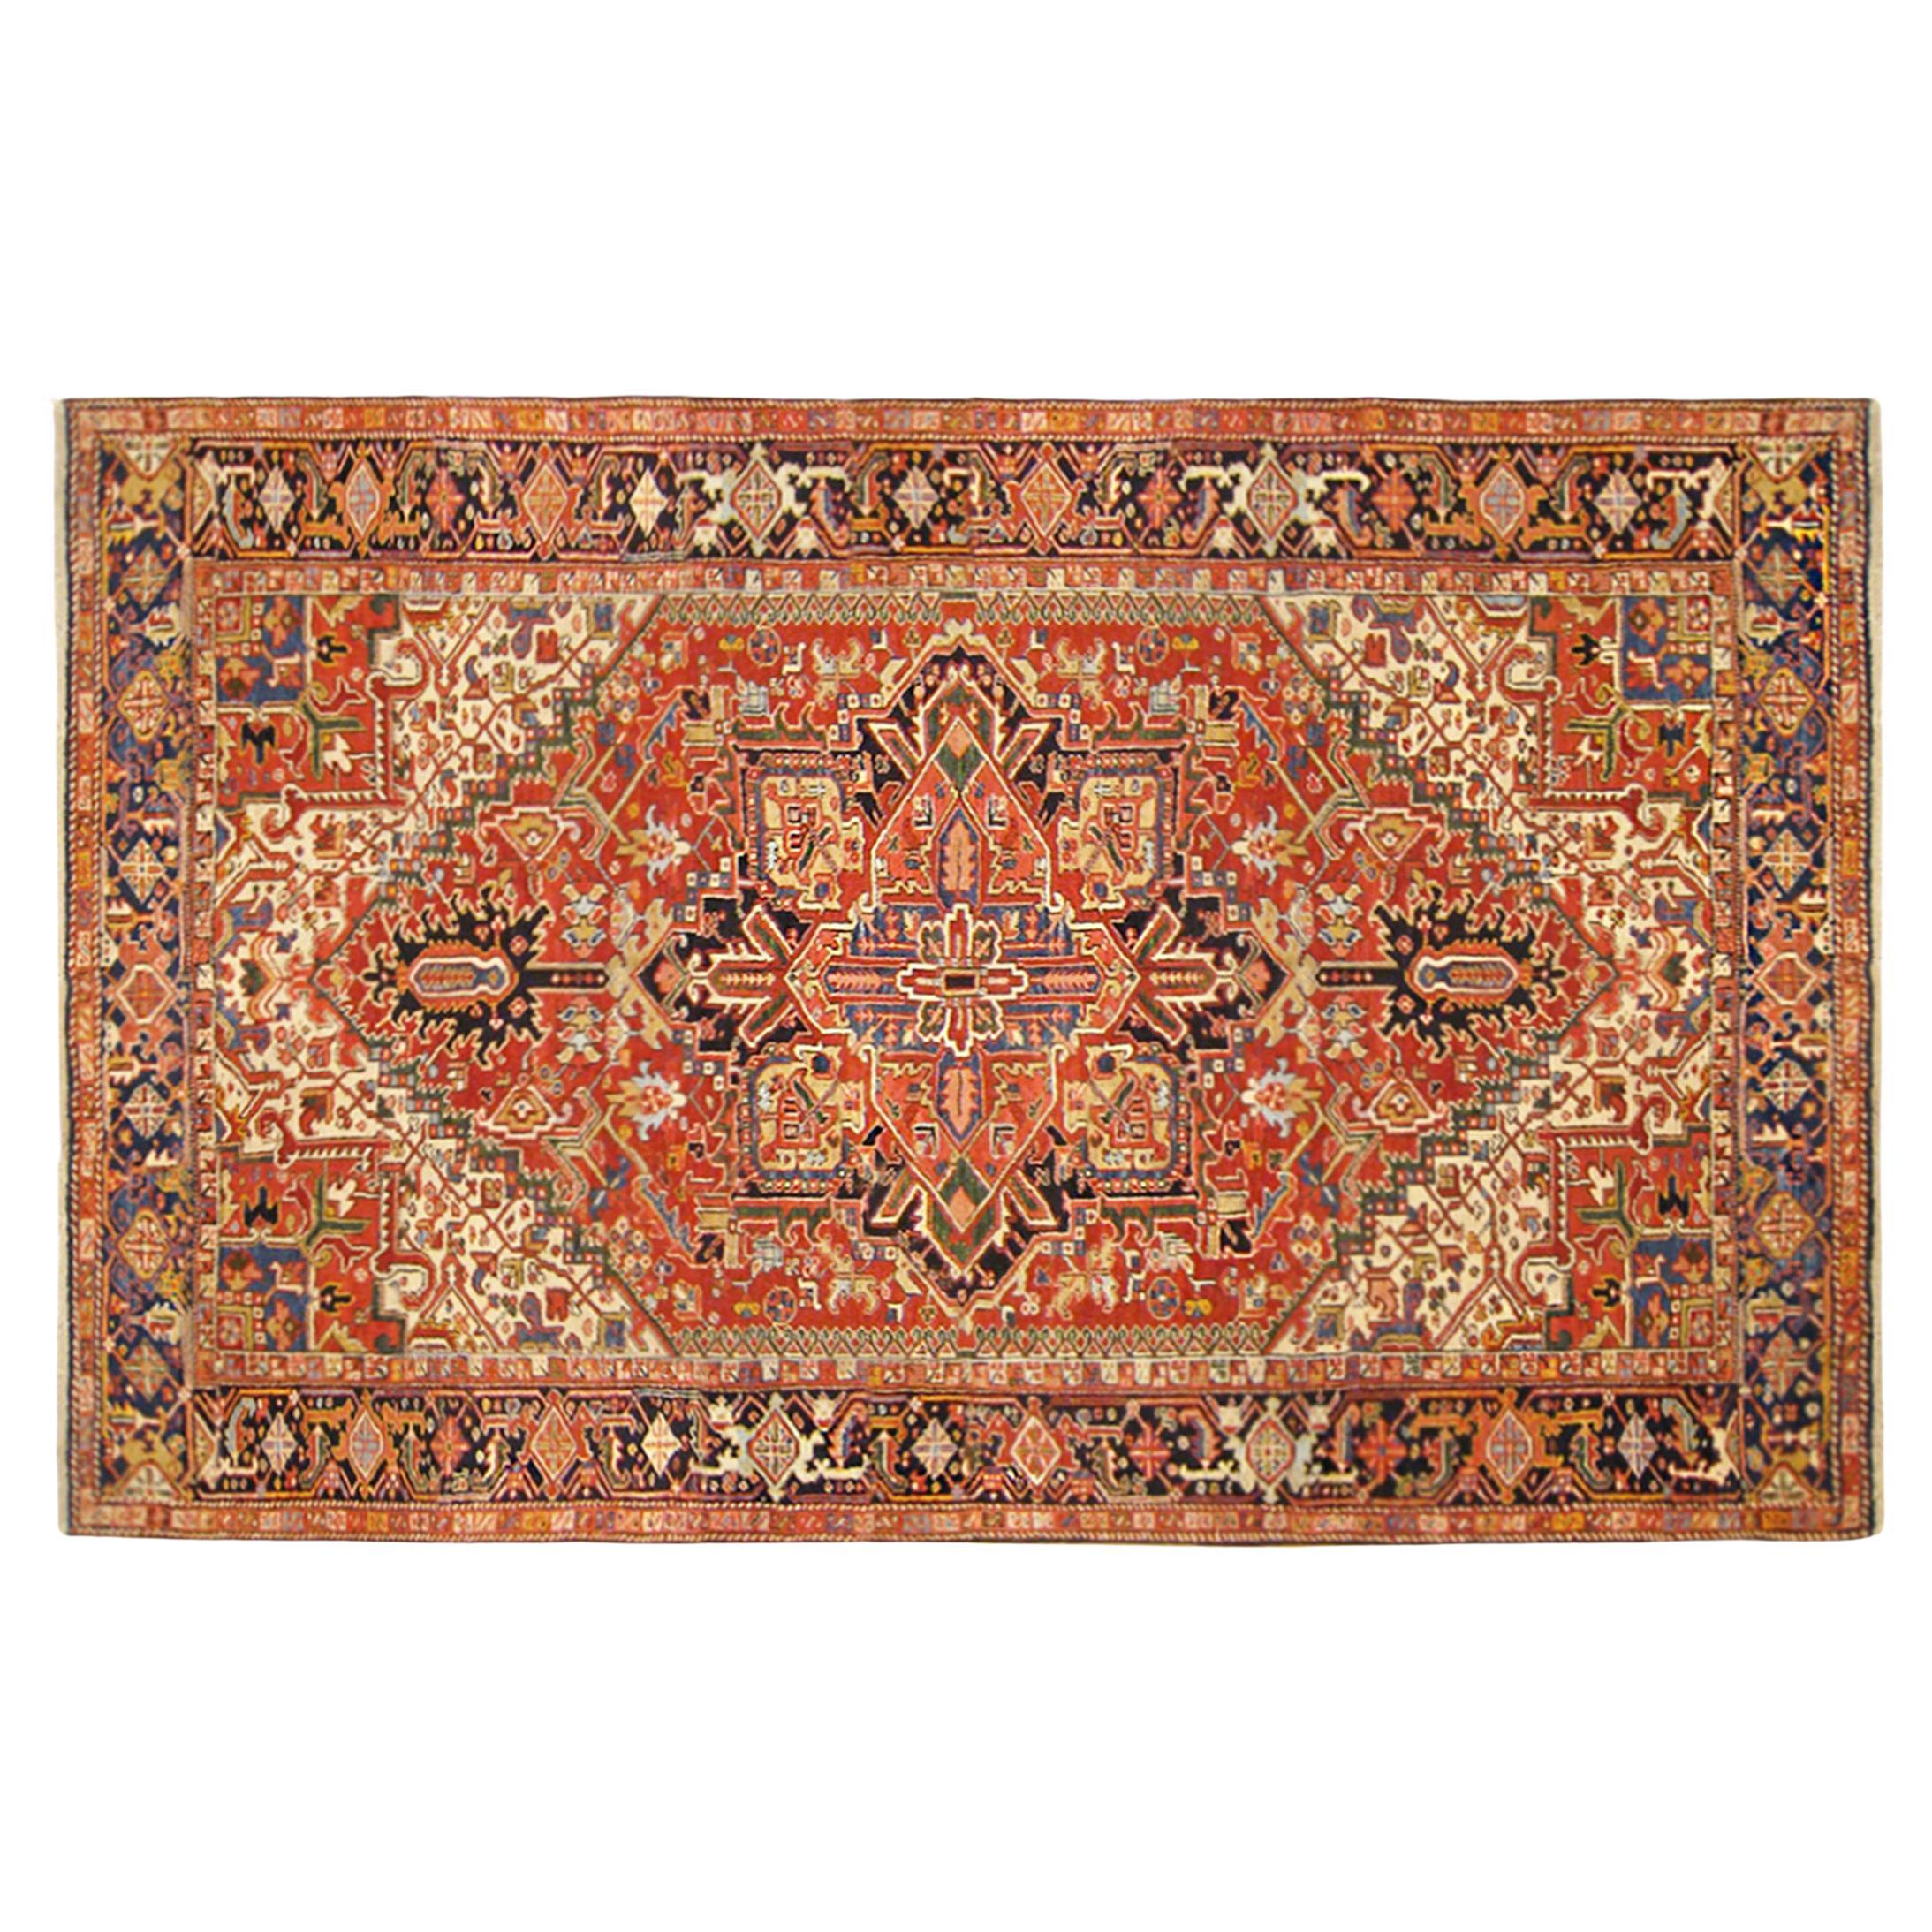  Antique Persian Decorative Oriental Heriz Rug in Room Size